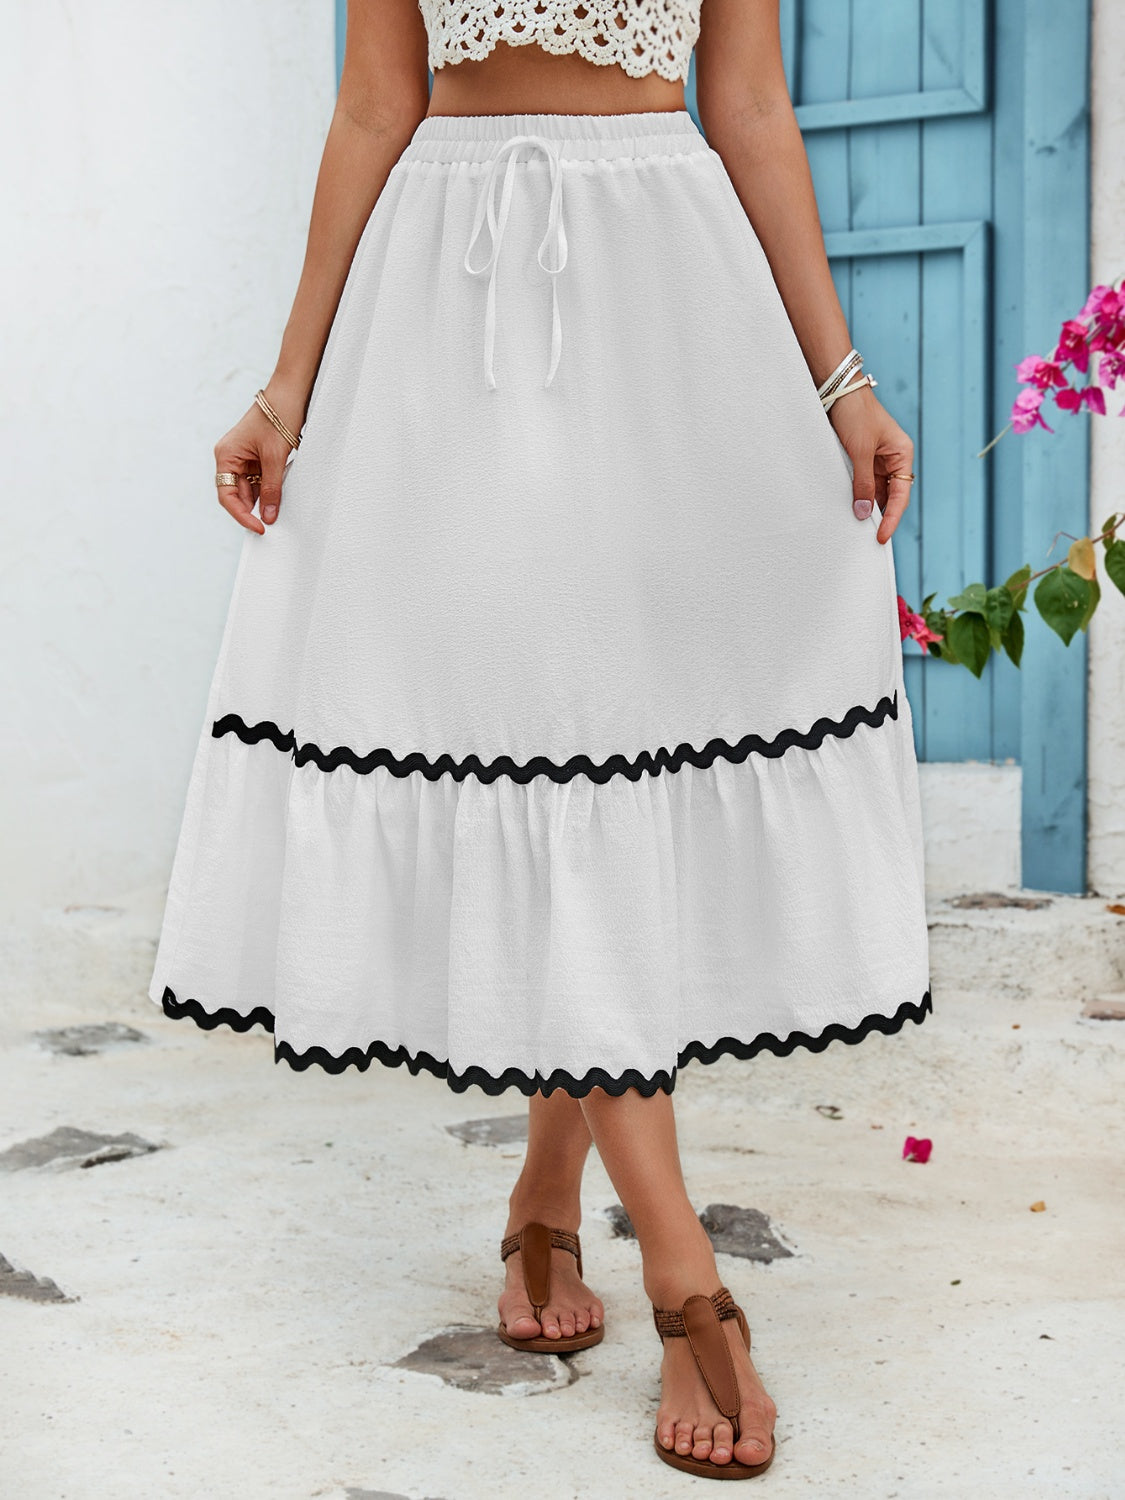 White Contrast Trim High Waist Skirt